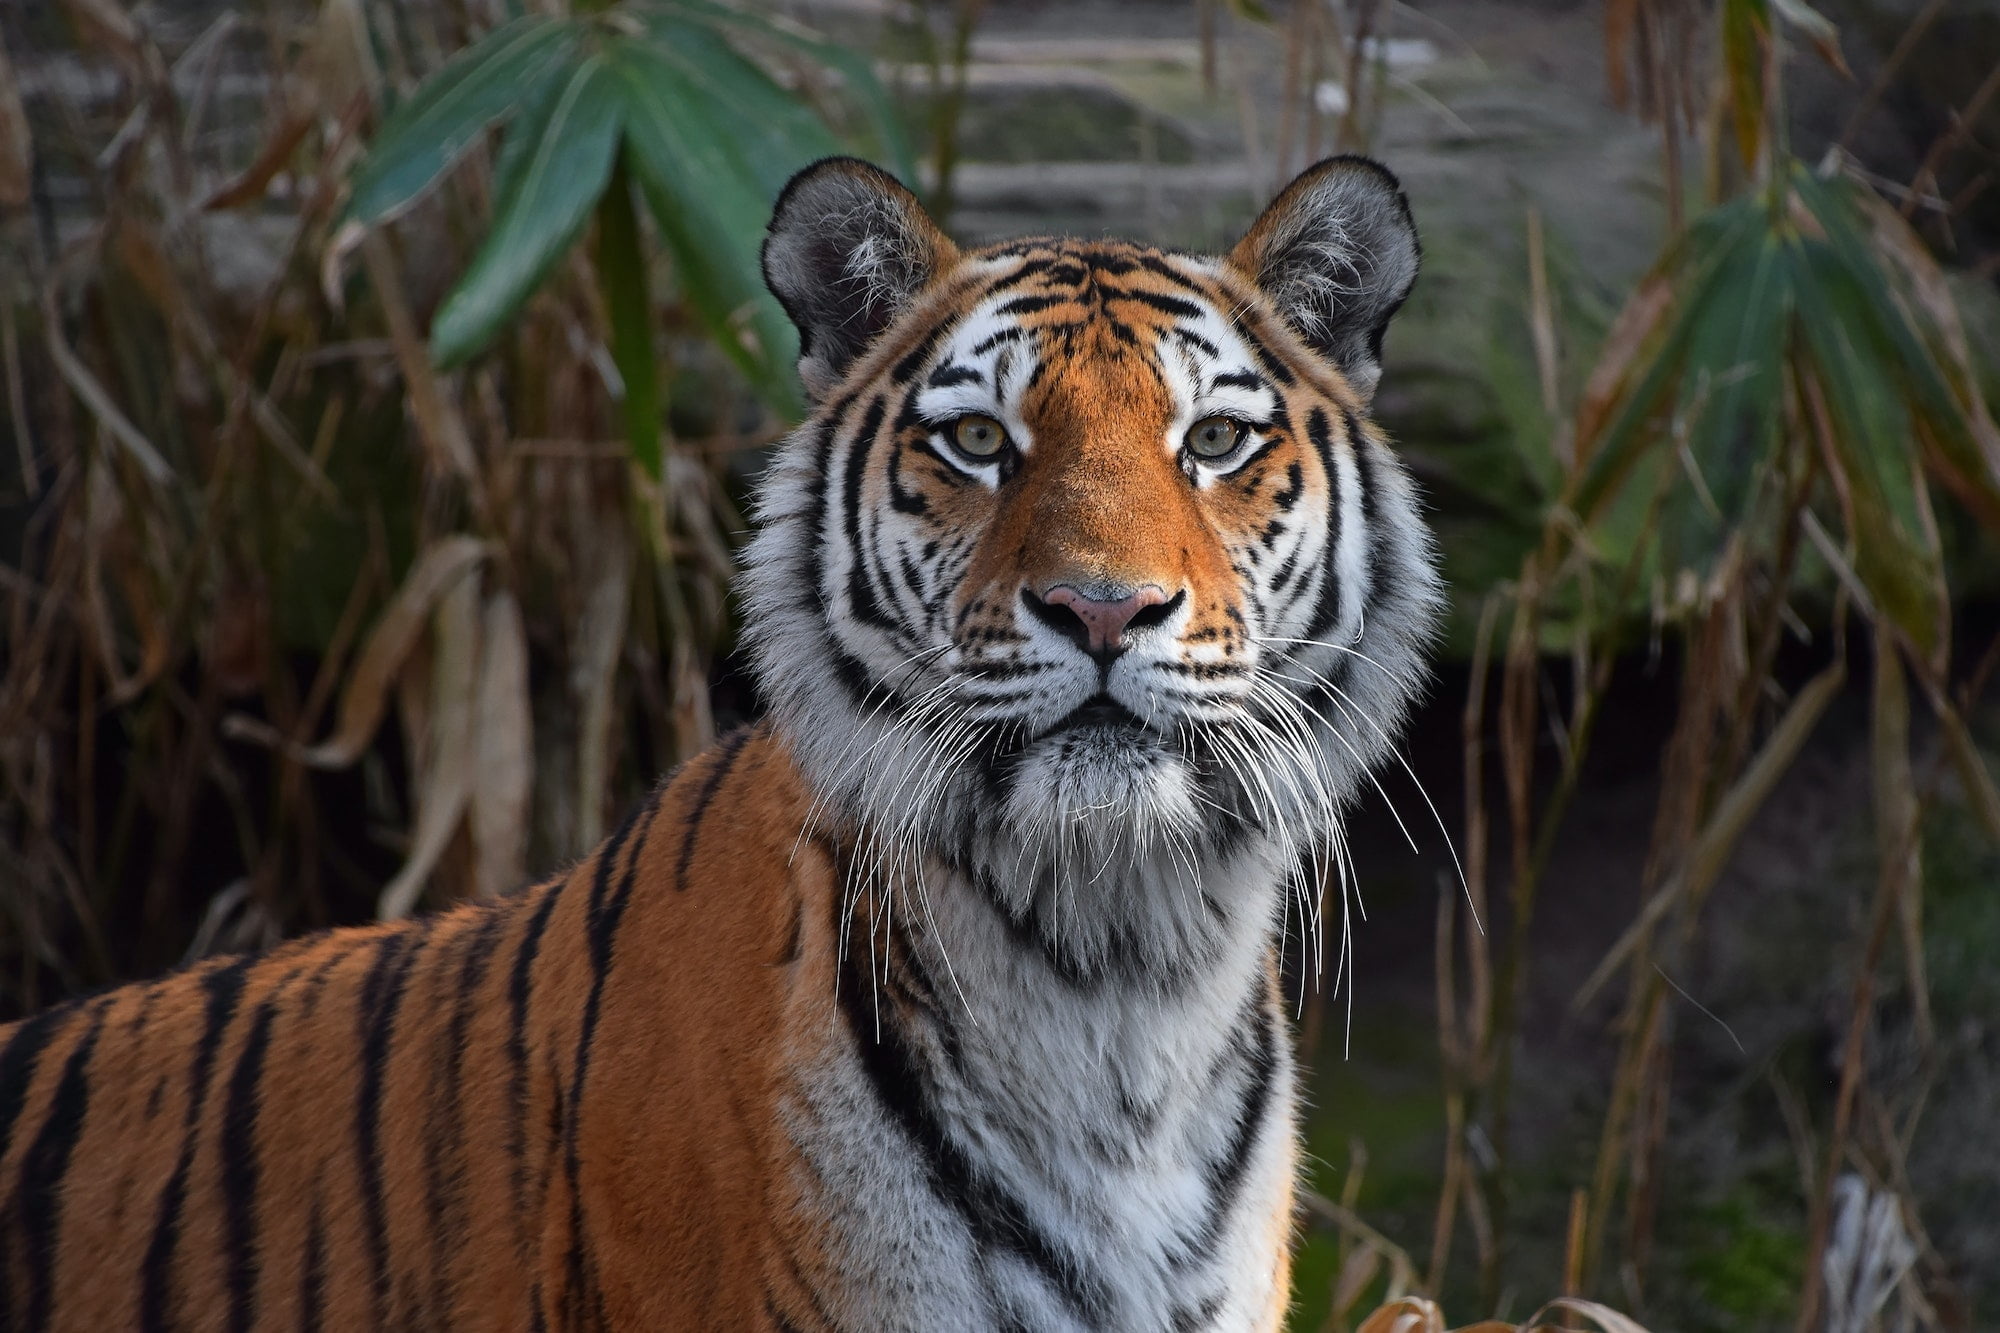 Close up portrait of Siberian Amur tiger